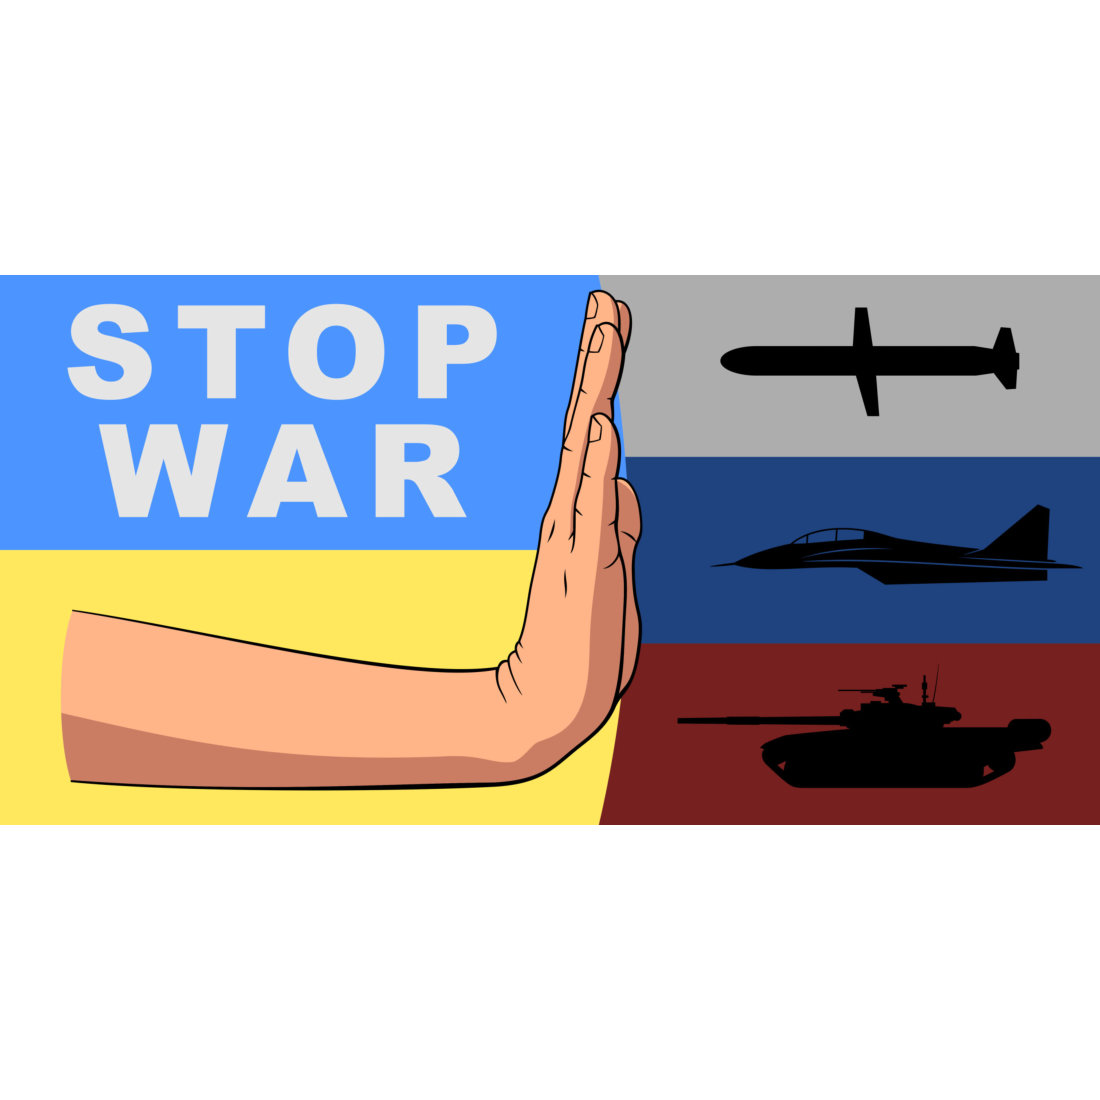 Stop war in Ukraine illustration.